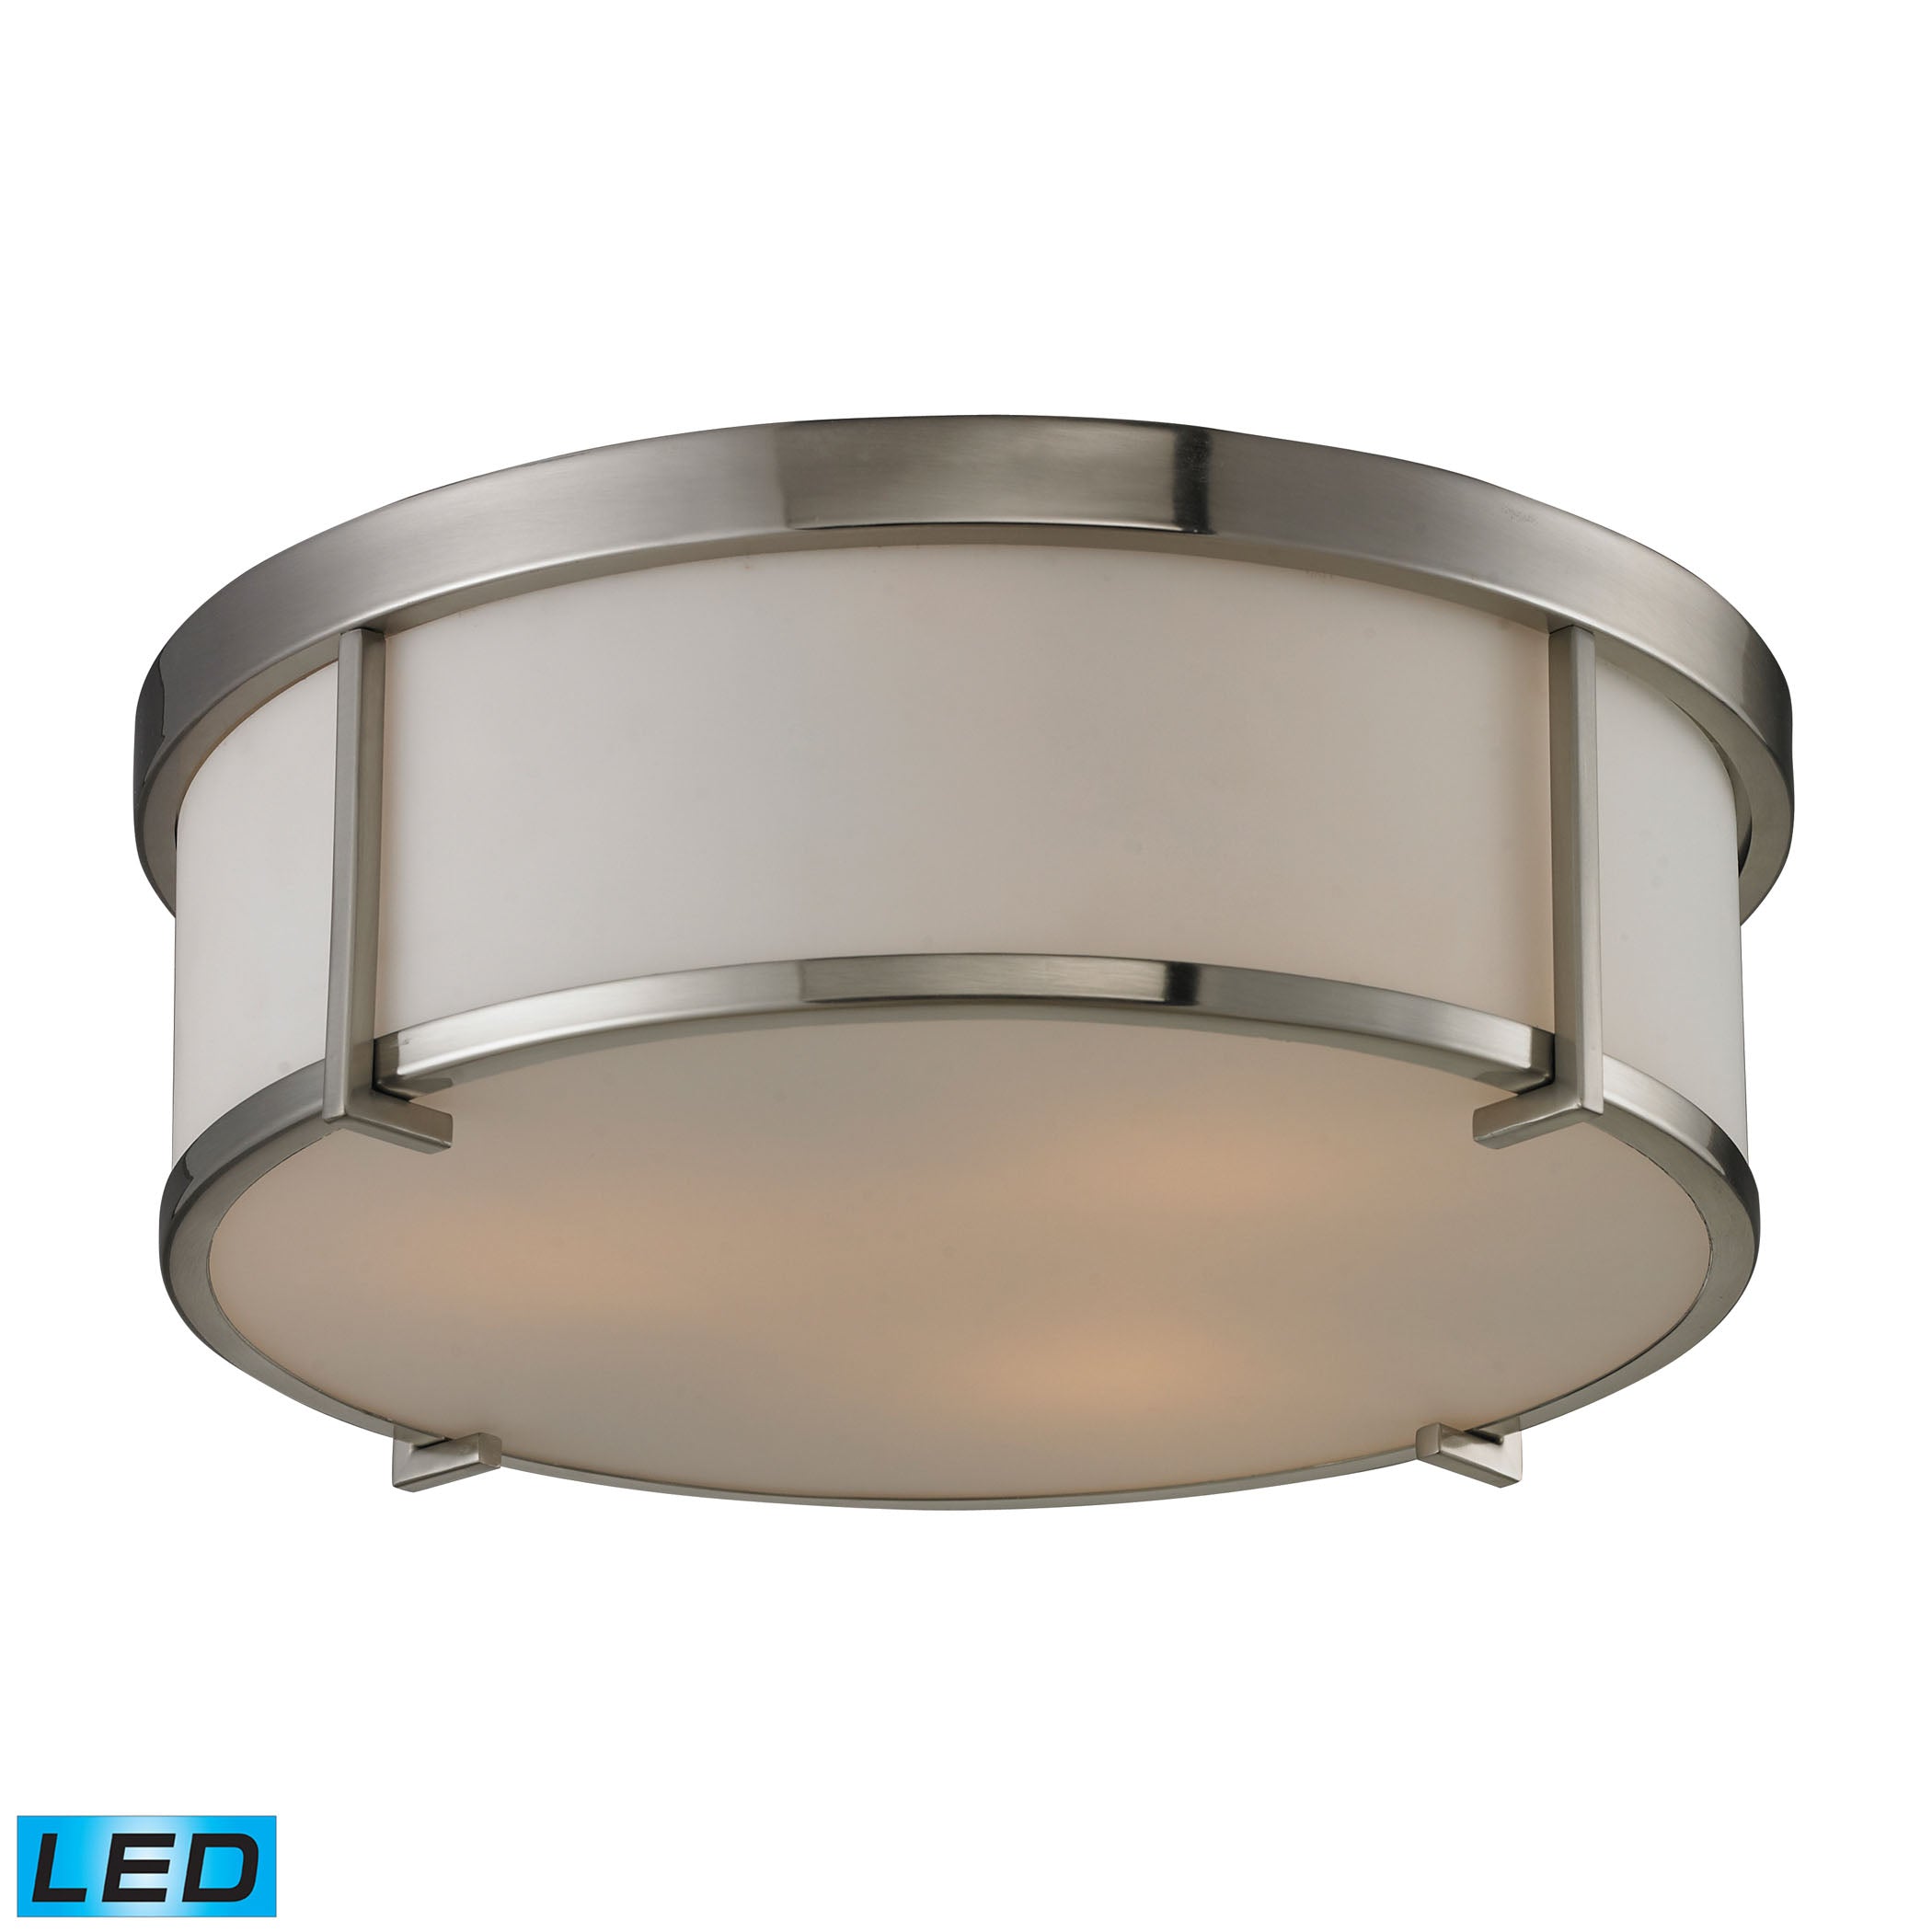 ELK Lighting 11465/3-LED Flushmounts 3-Light Flush Mount in Brushed Nickel with Opal White Glass - Includes LED Bulbs